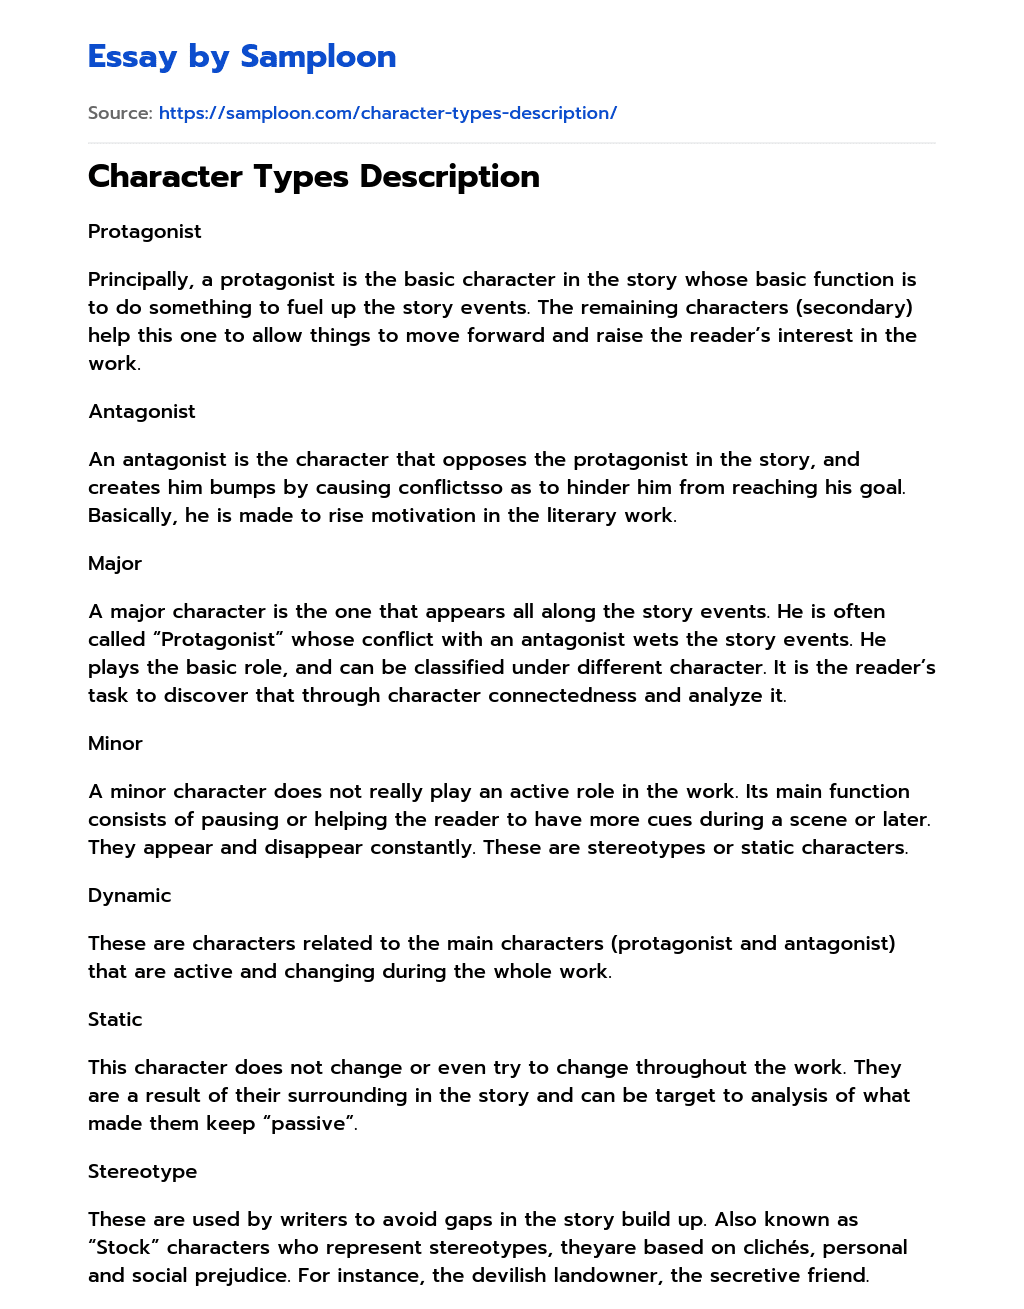 Character Types Description essay